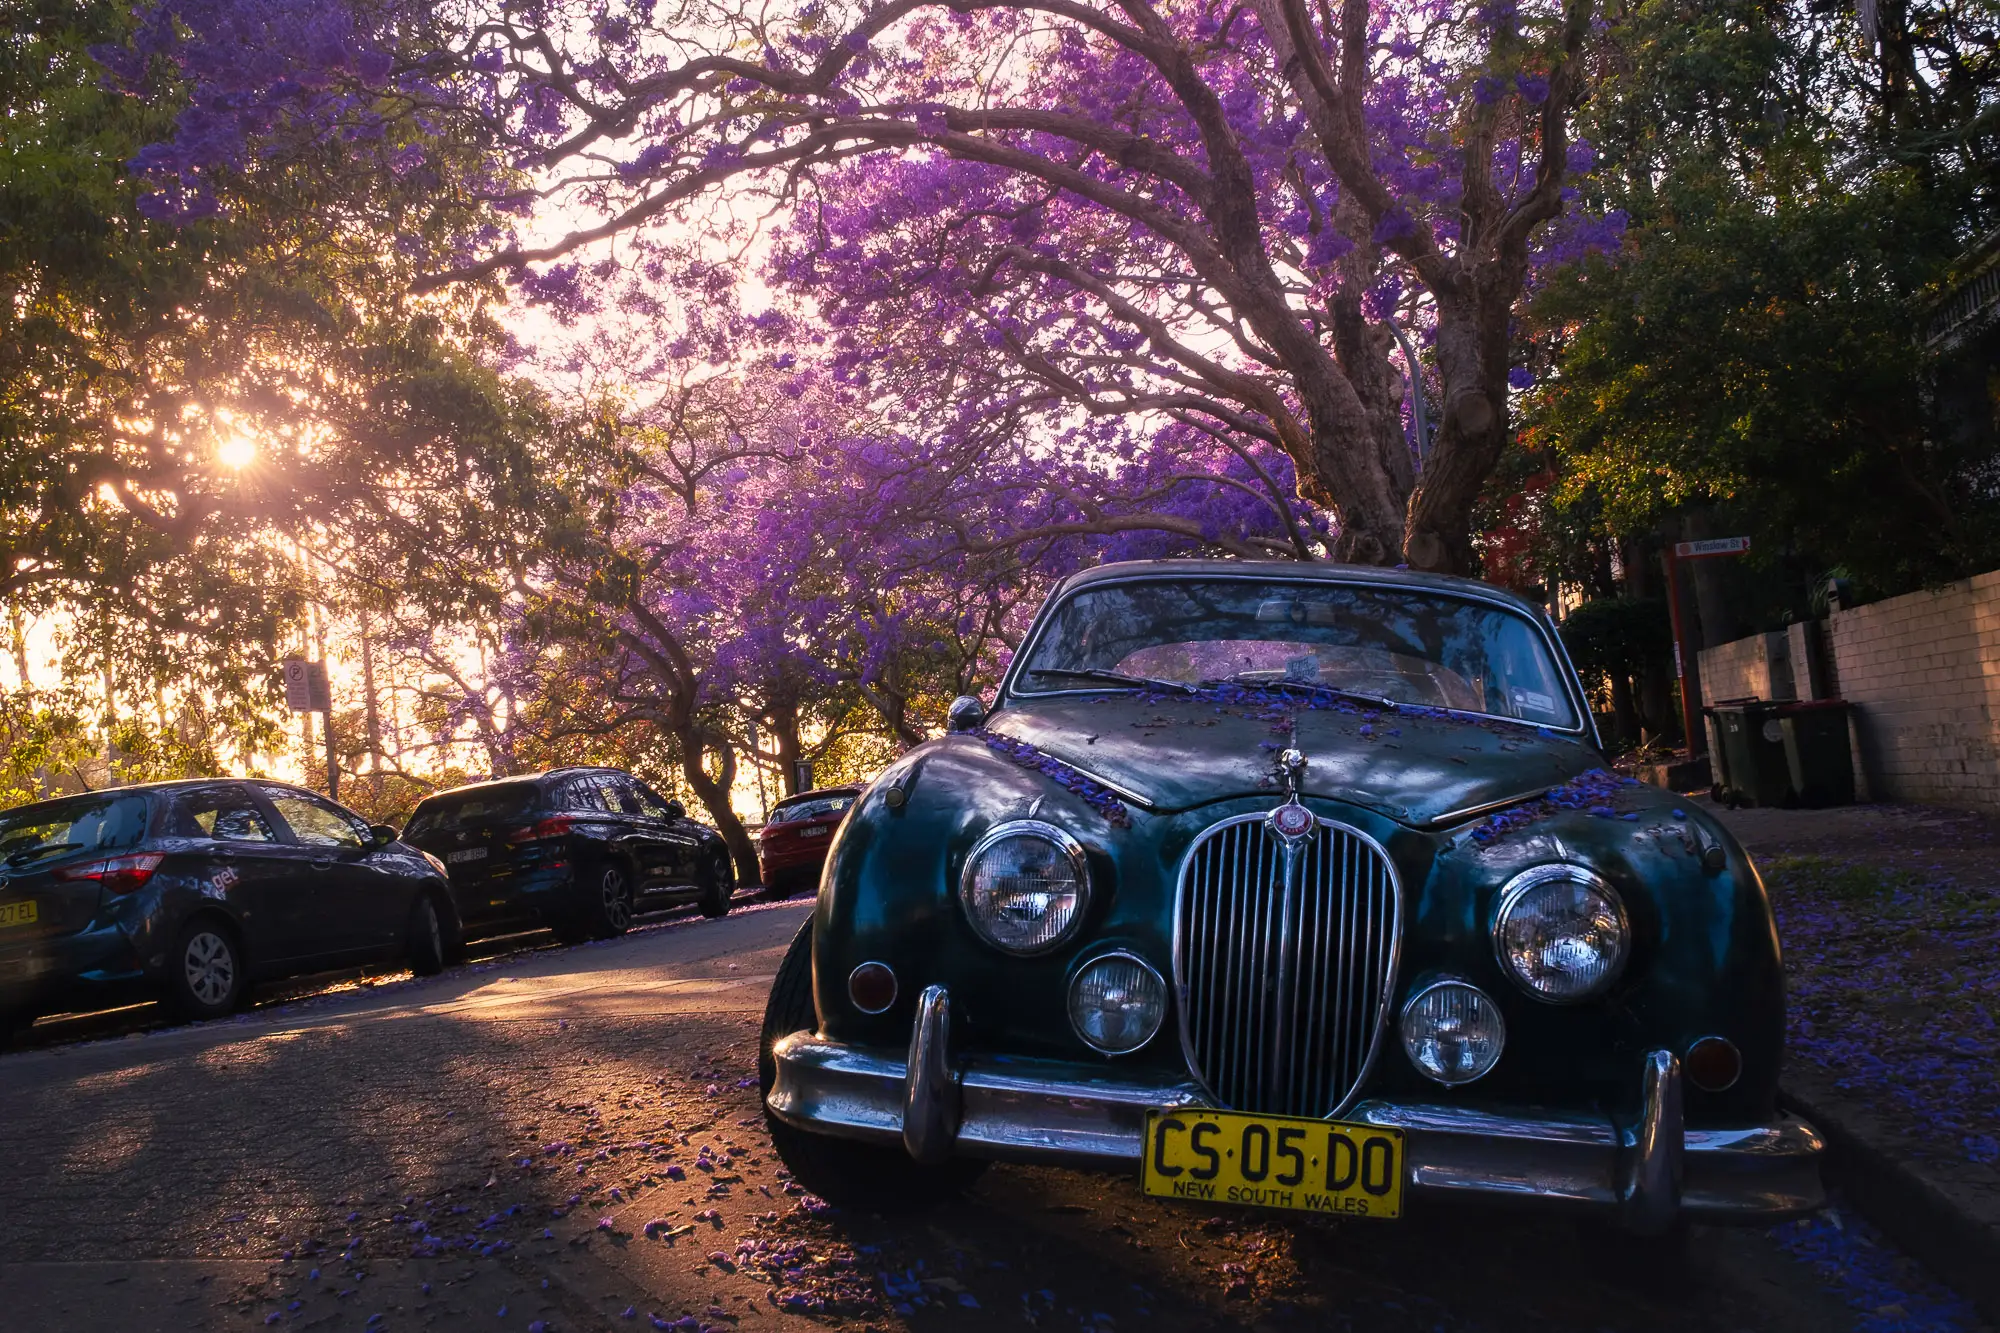 Jacaranda trees in Kirribilli, Sydney